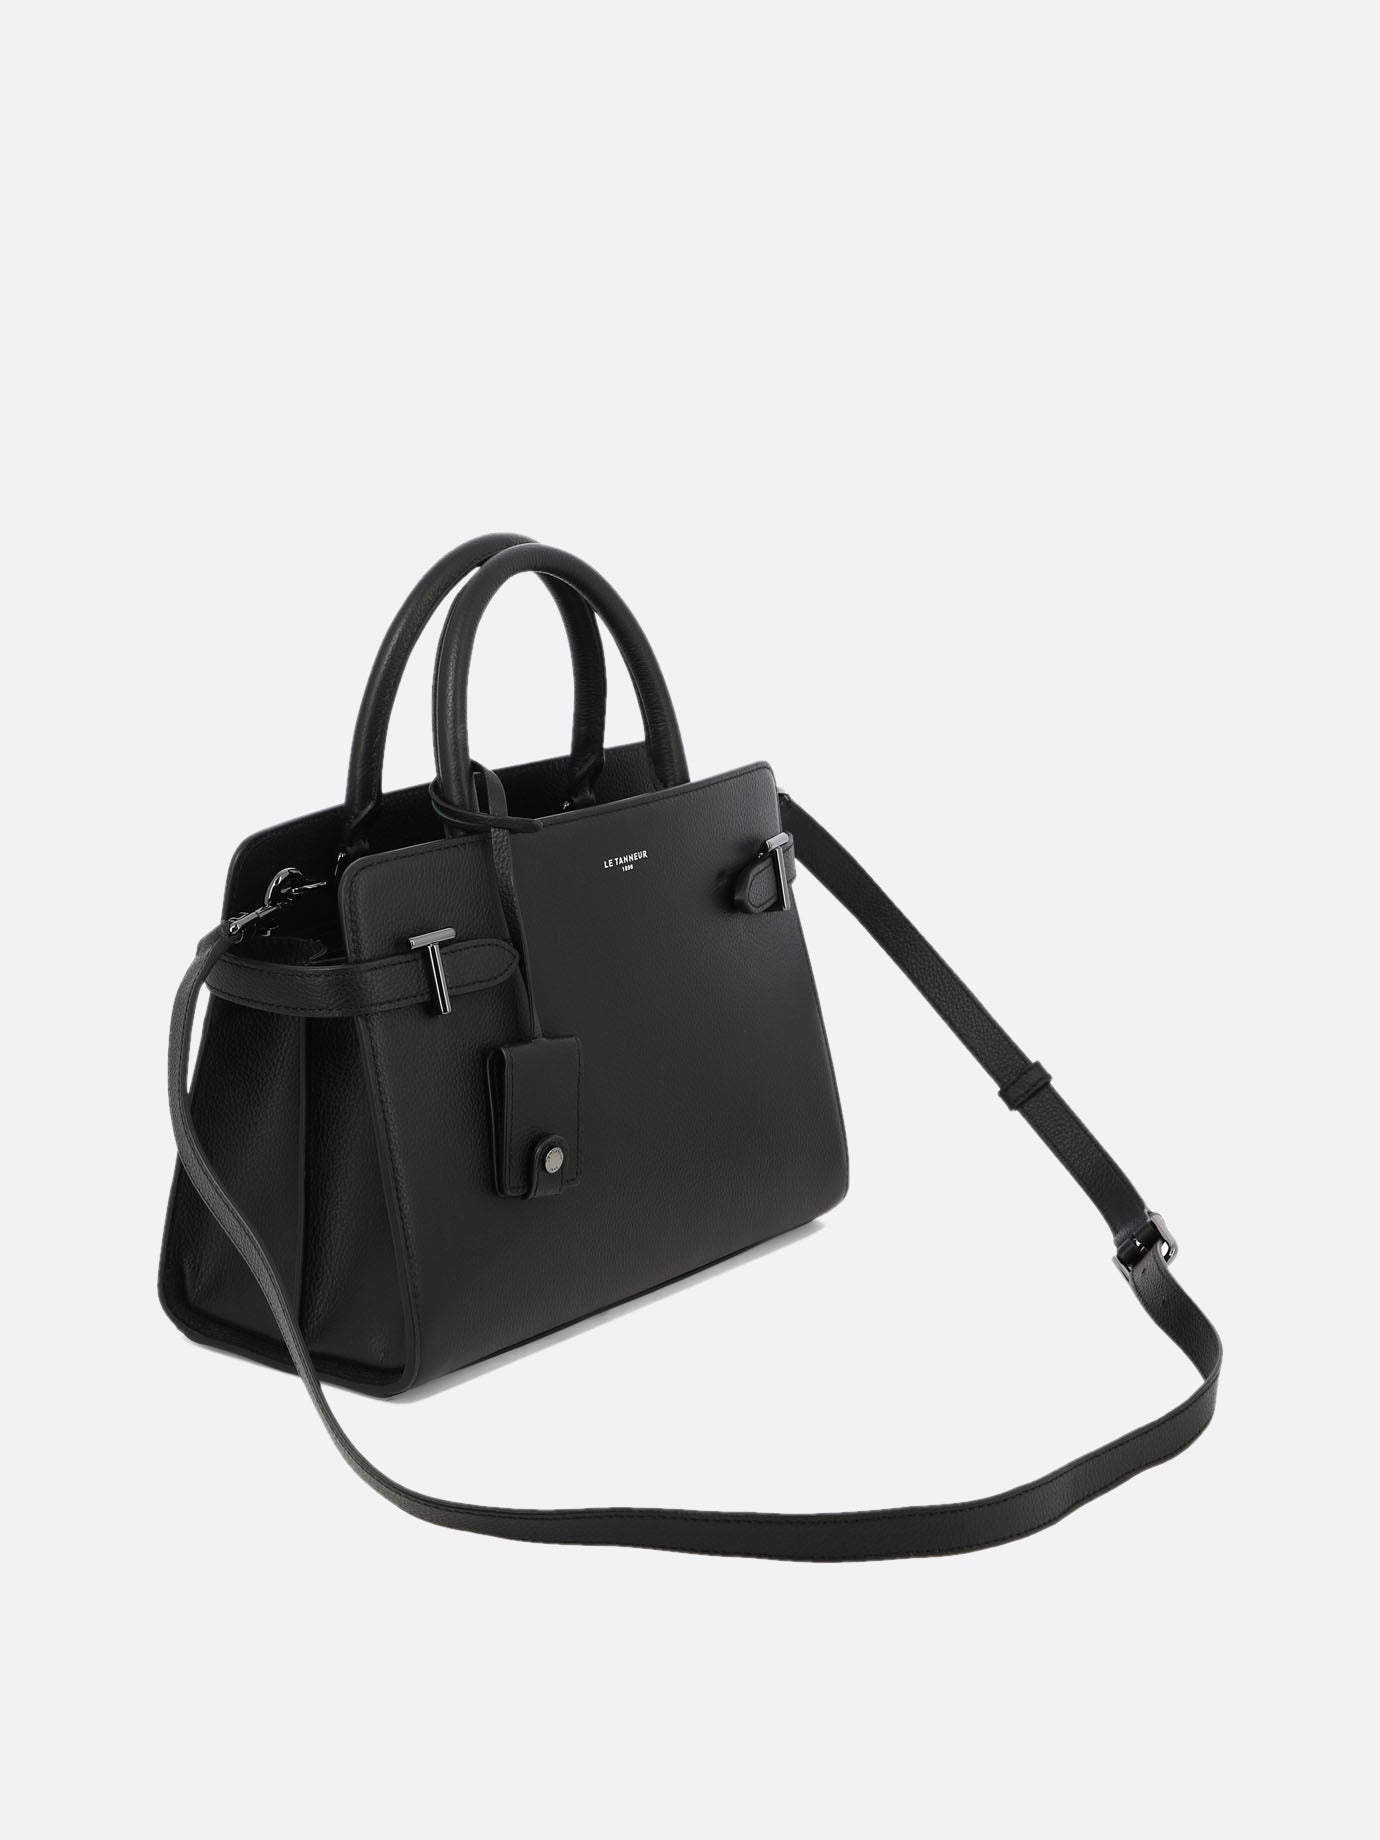 "Emilie" handbag